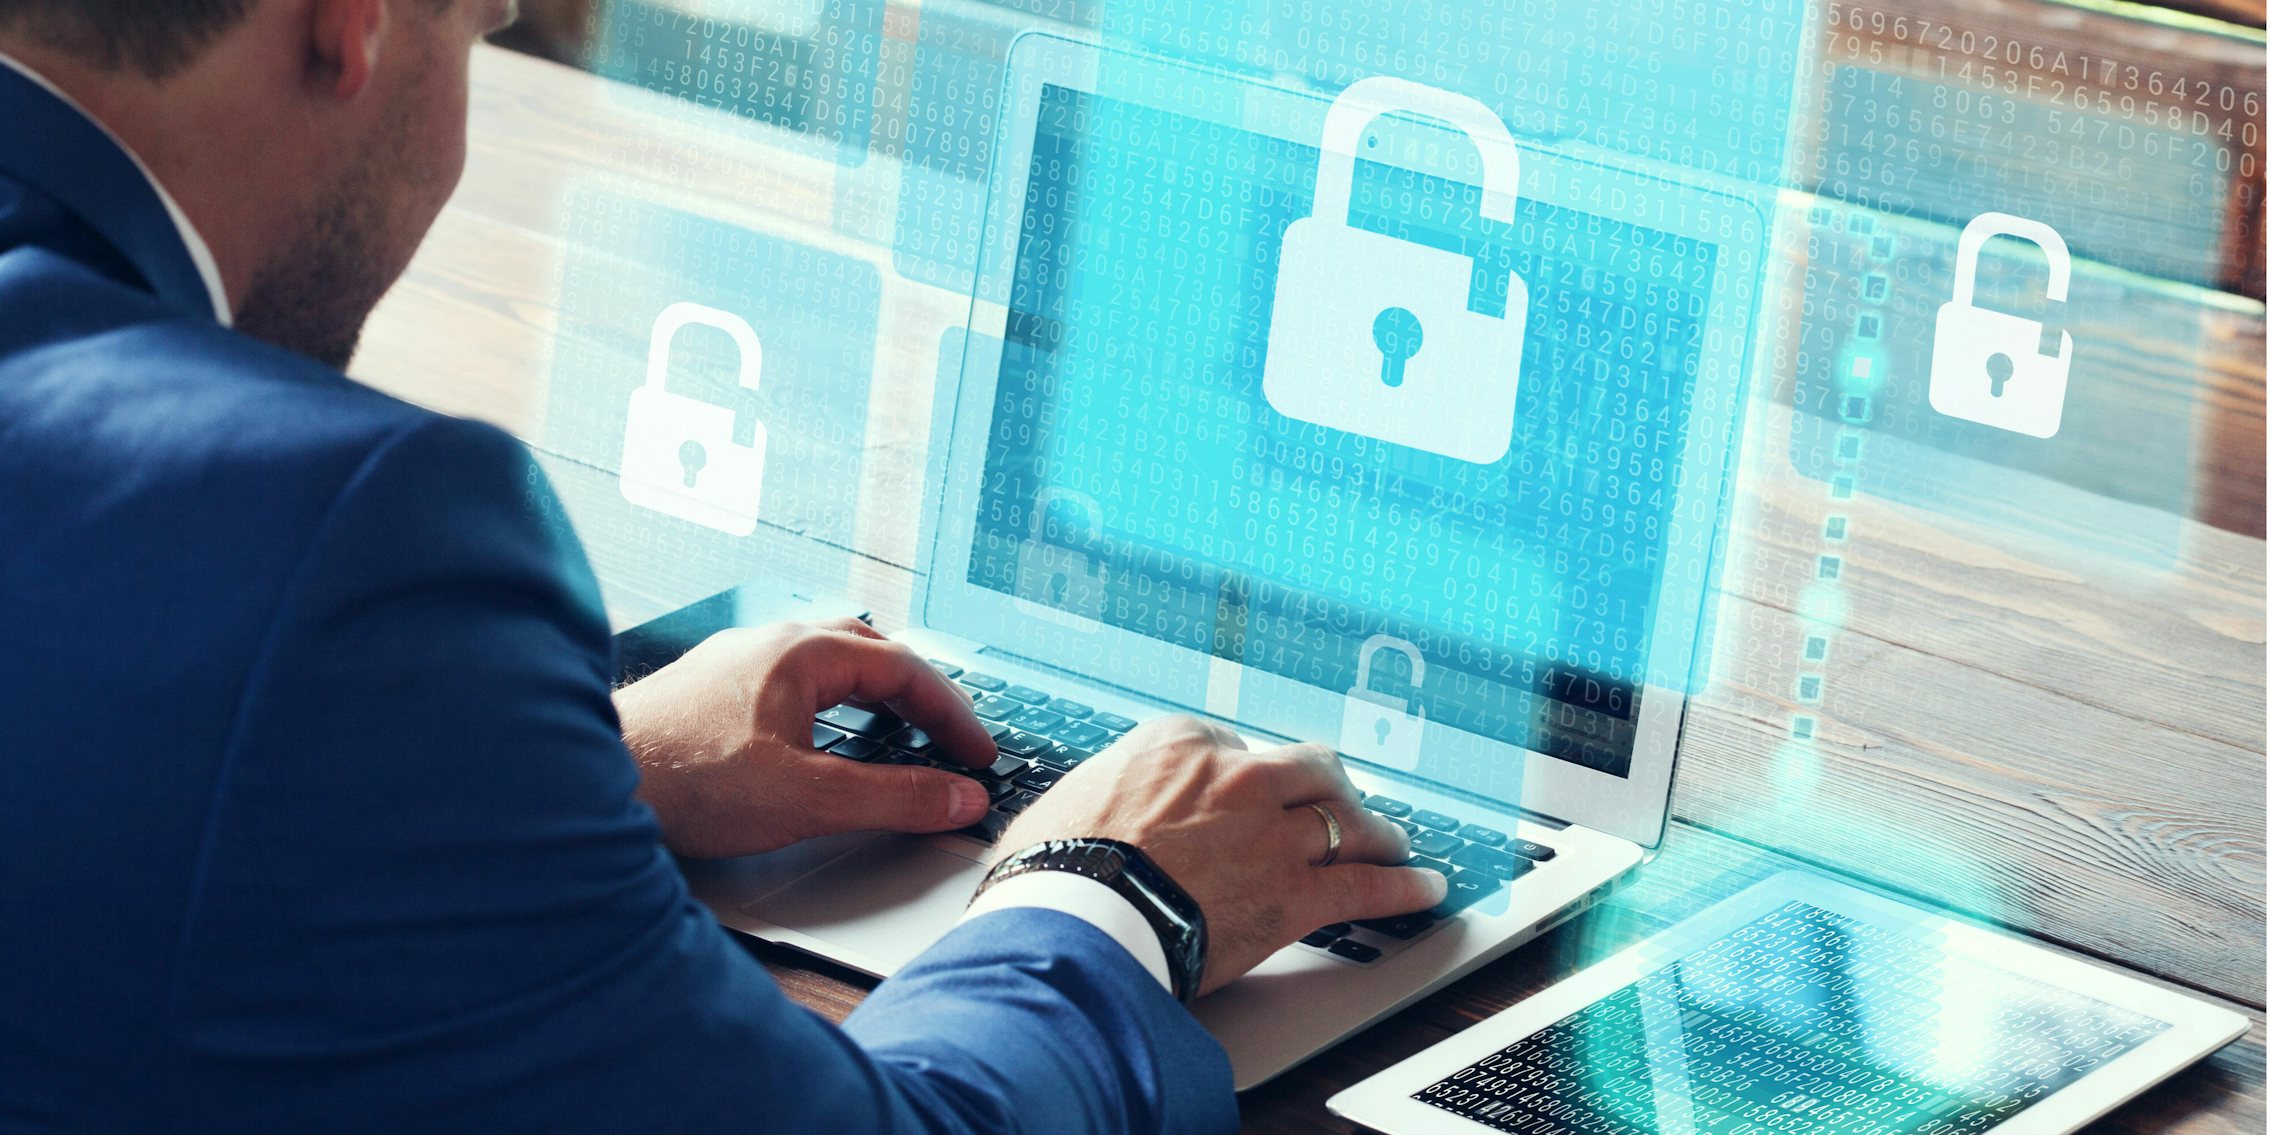 laptop security unlocked cybersecurity breach